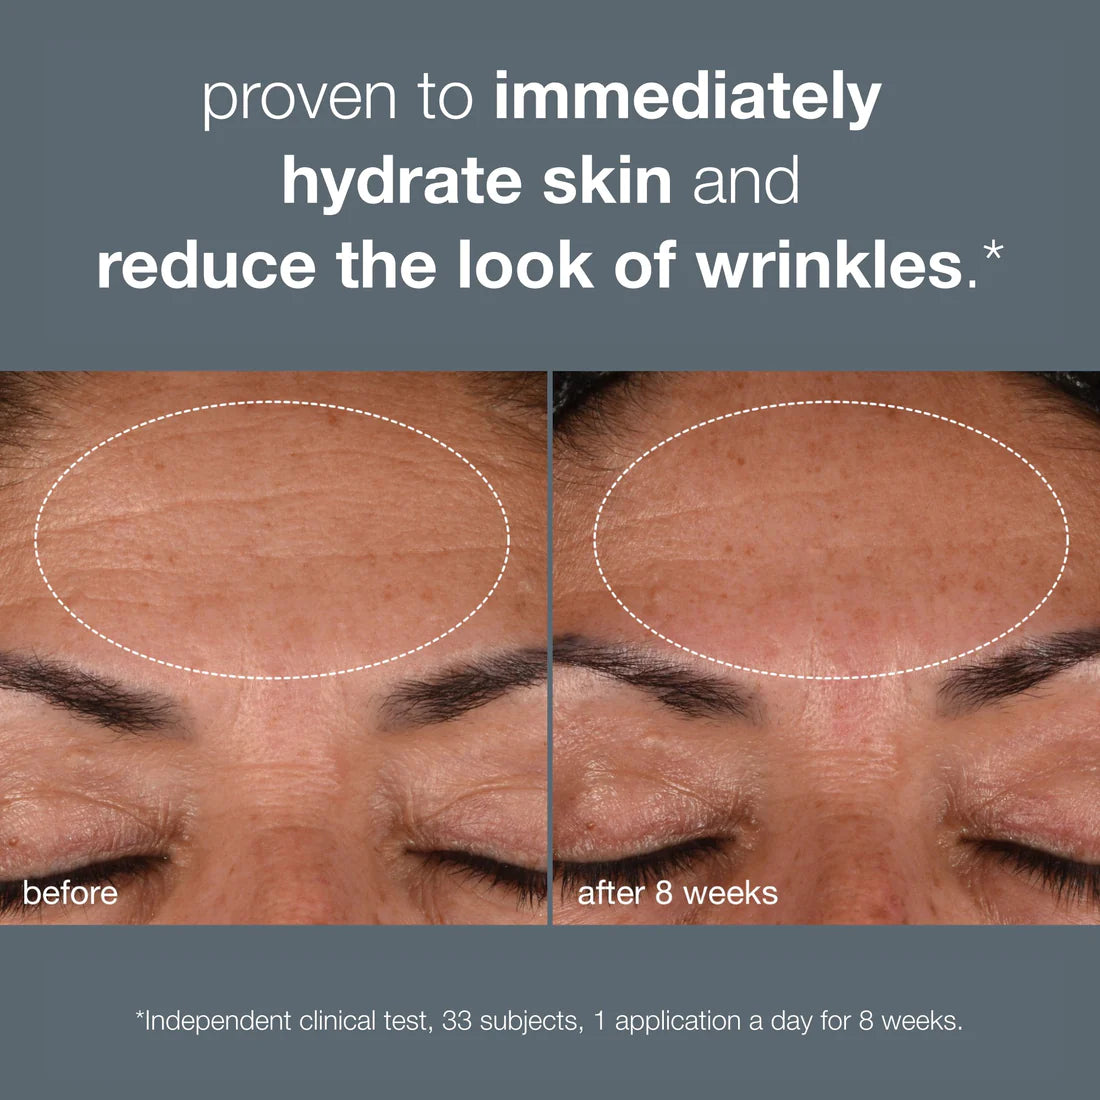 dynamic skin recovery spf50 moisturizer